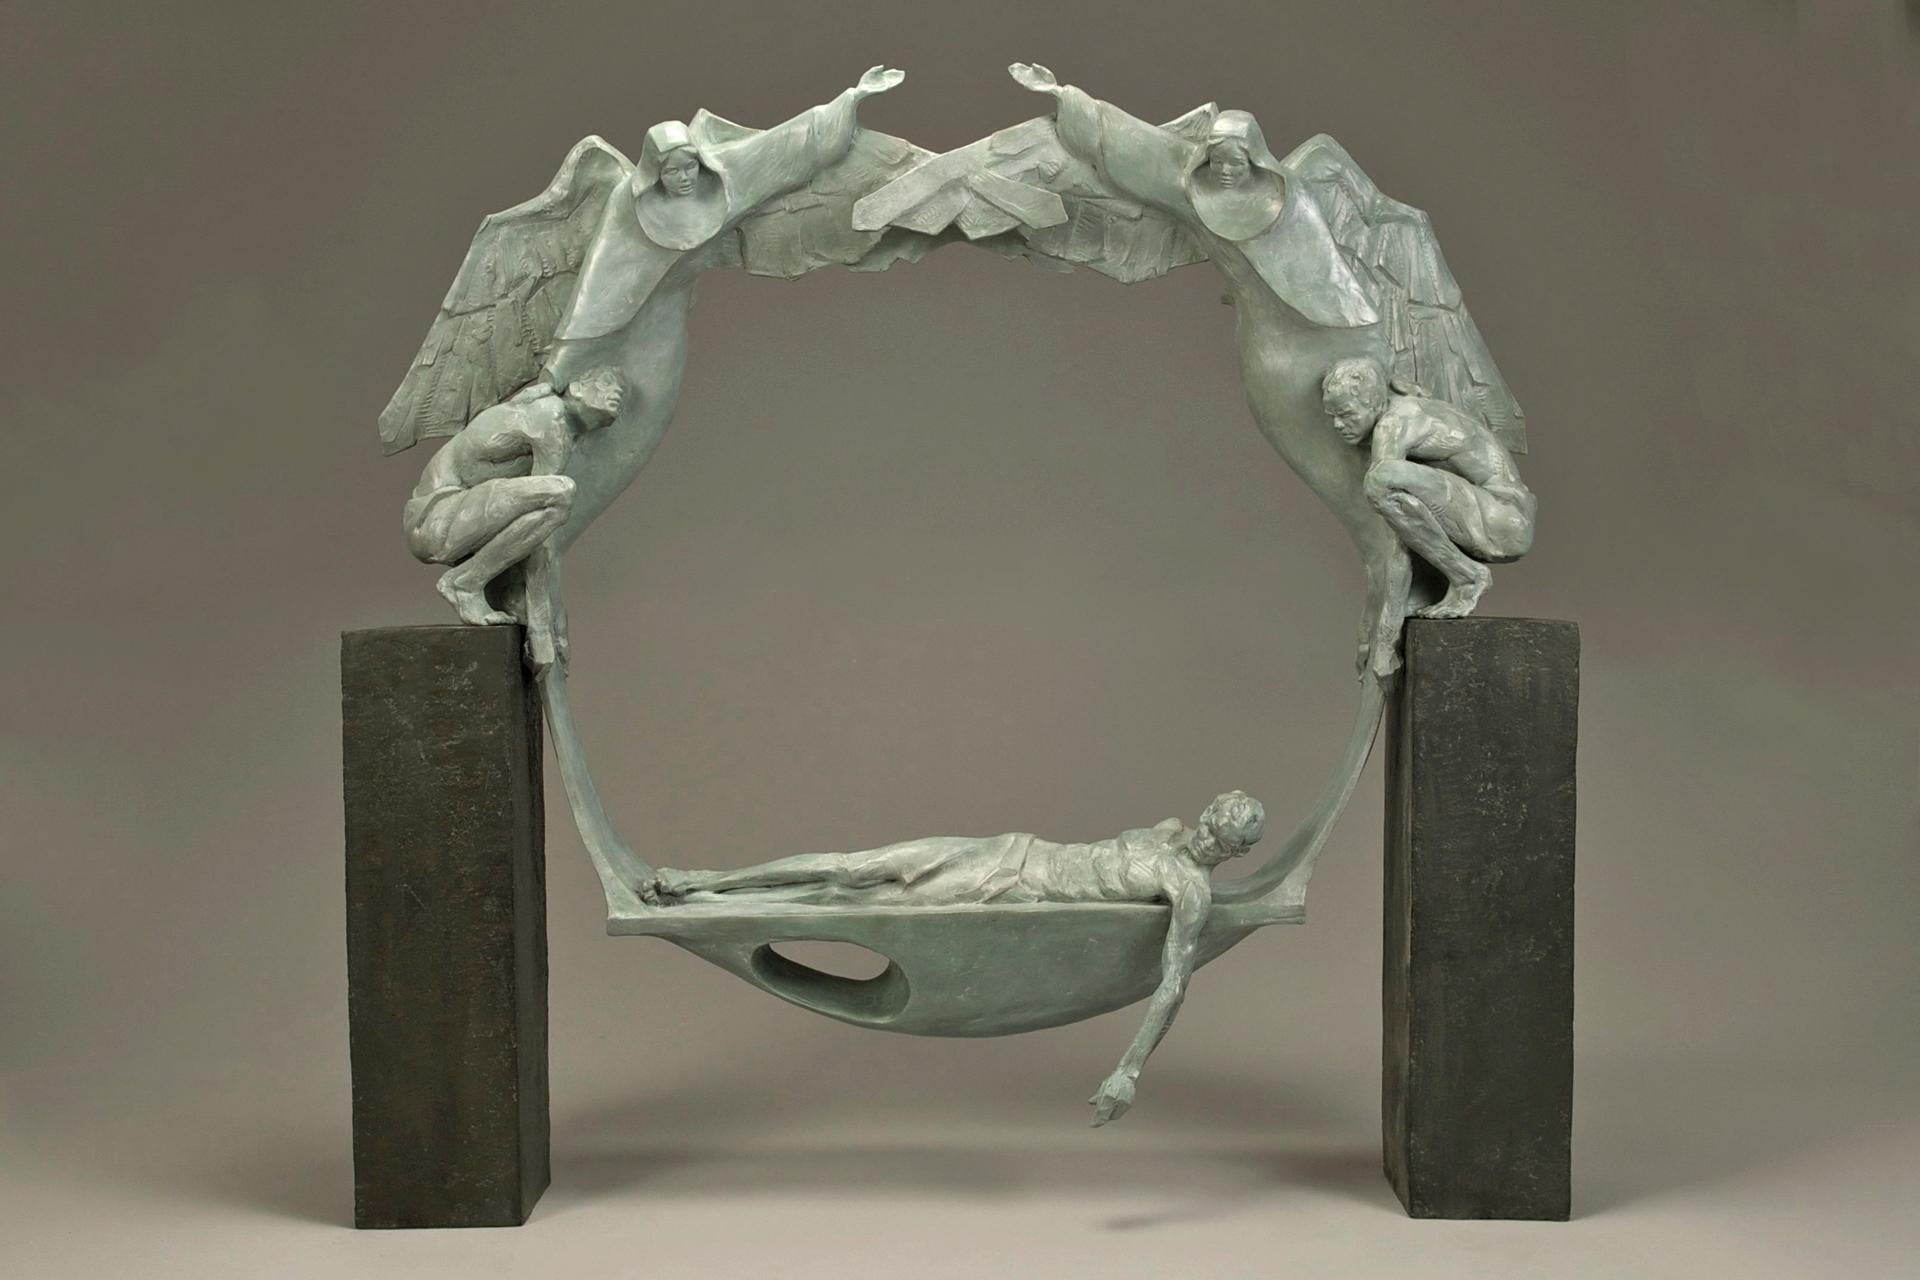 Clay Enoch Figurative Sculpture - Faith and Resolve 15x13x3" Bronze Sculpture